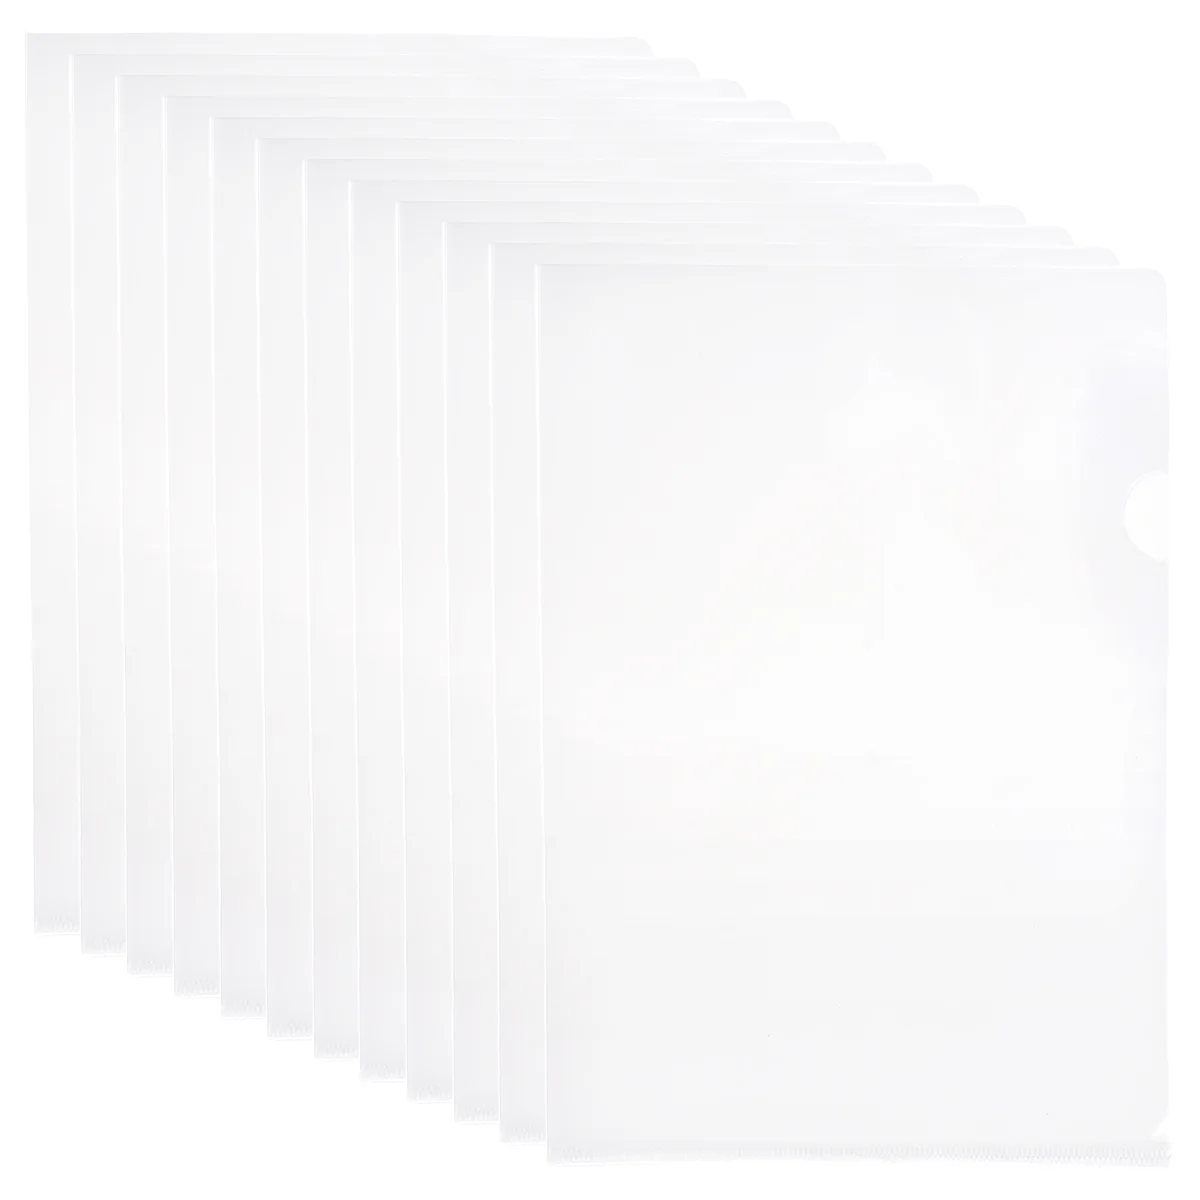 

12pcs Clear Document Folder L-Type Plastic Folder Copy Safe Project Pocket US Letter/ A4 Size in Transparent Color File